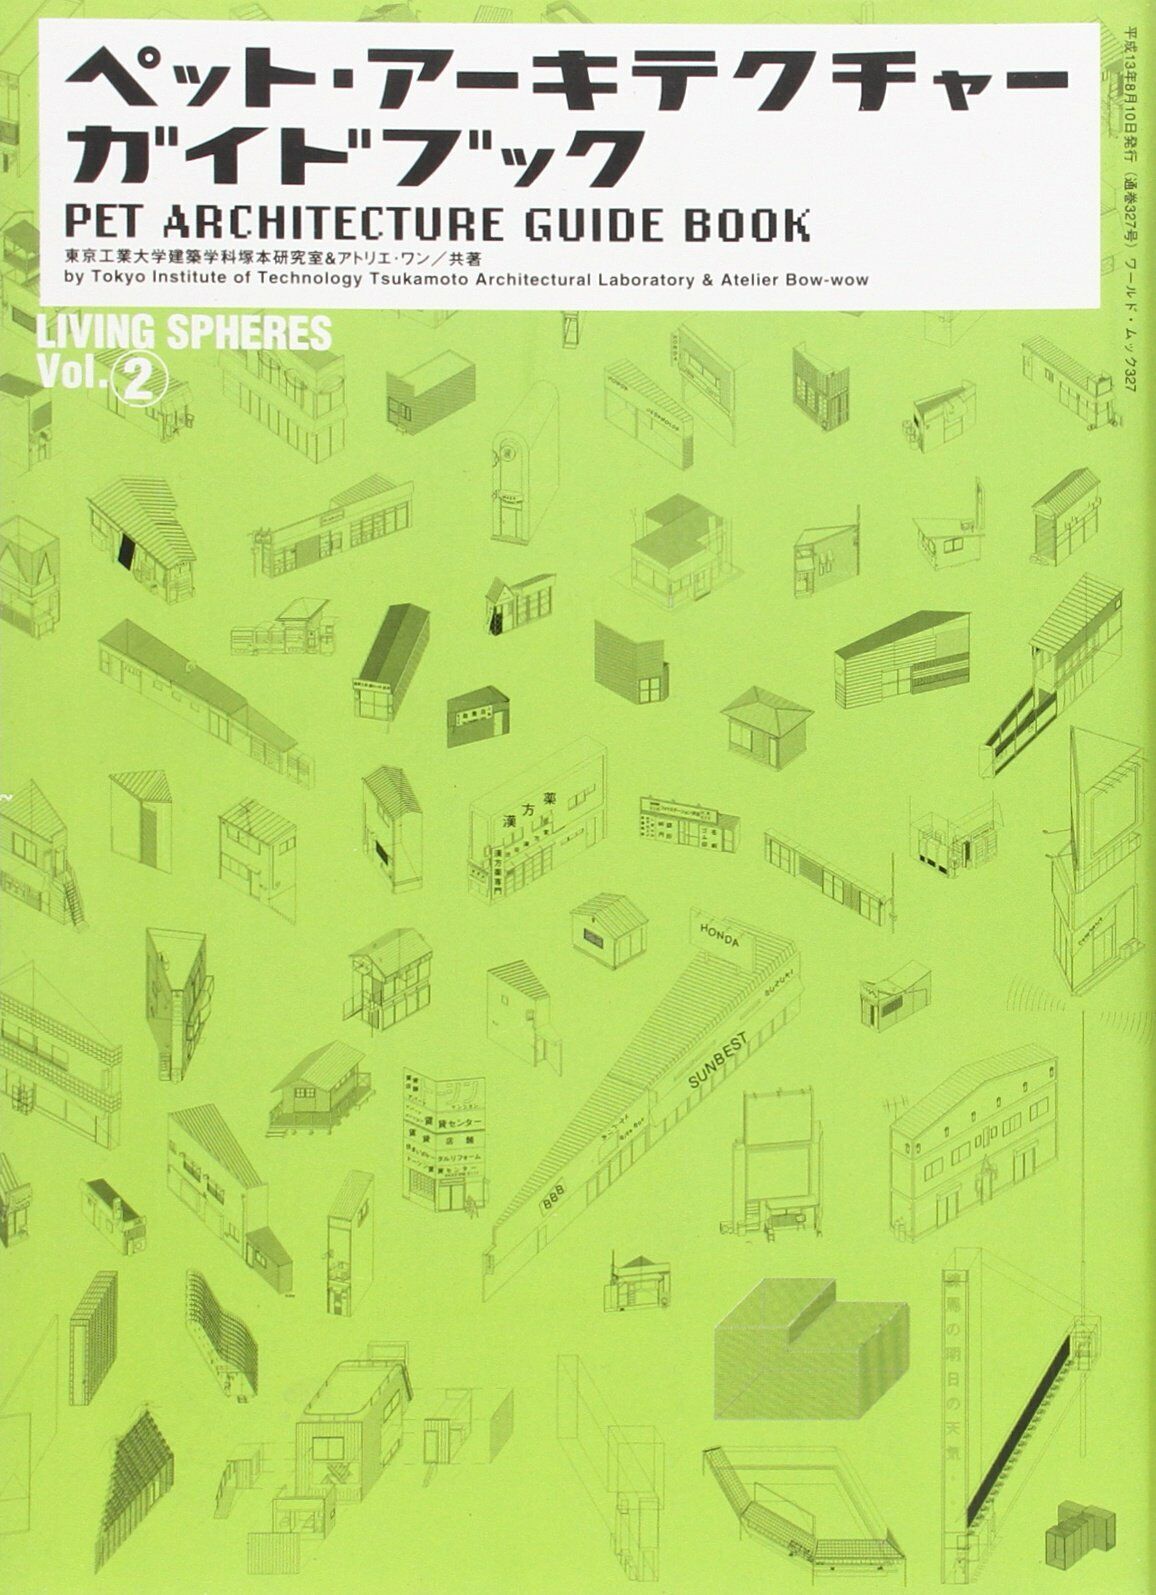 Pet Architecture Guidebook World Photo Press Paperback 2001